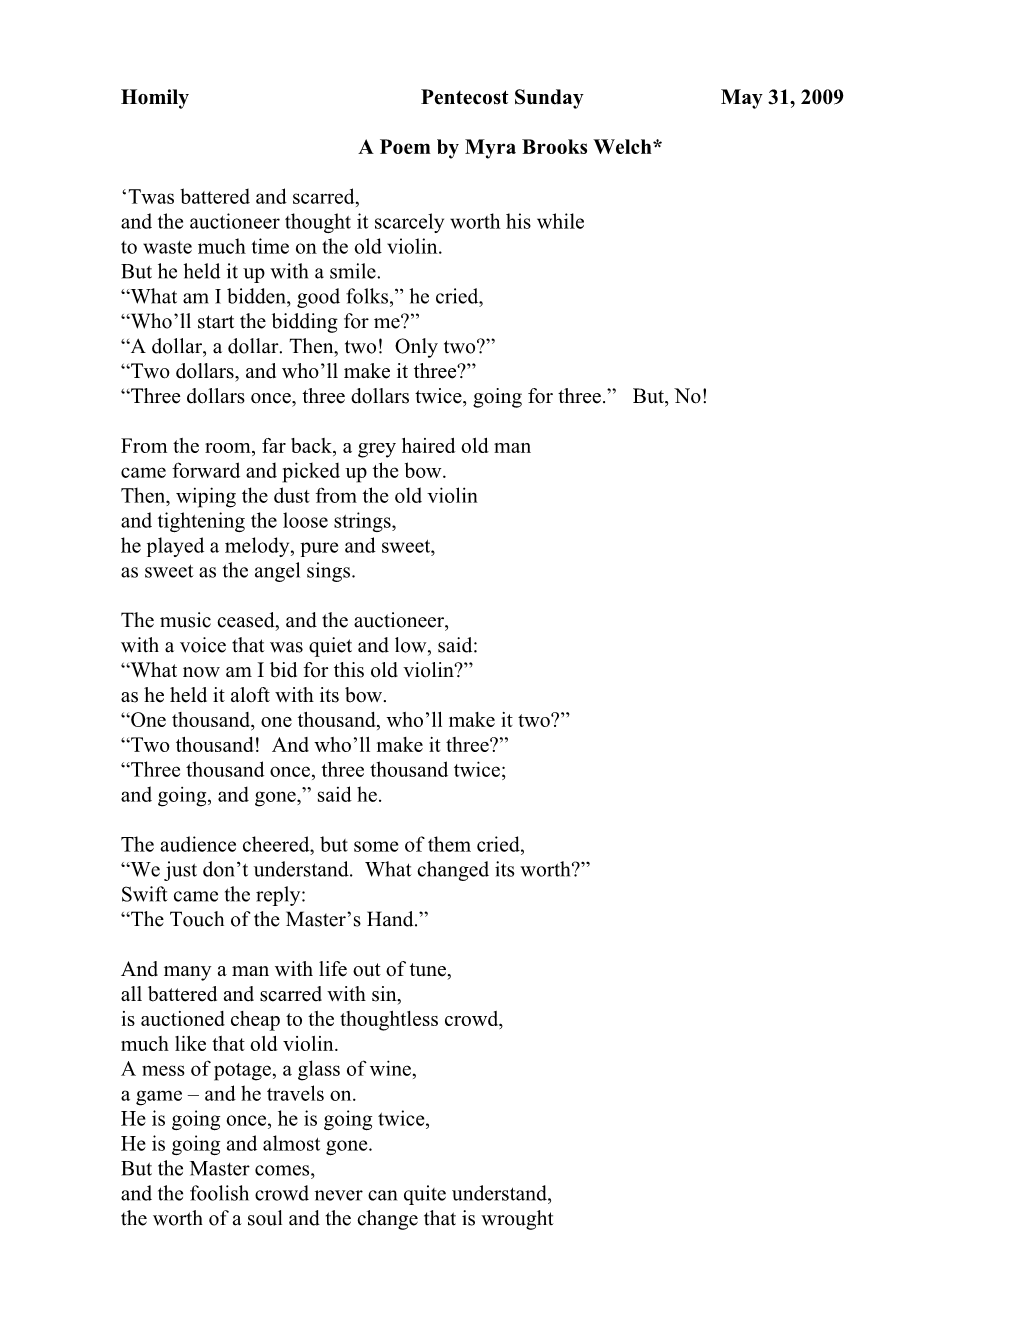 A Poem by Myra Brooks Welch*